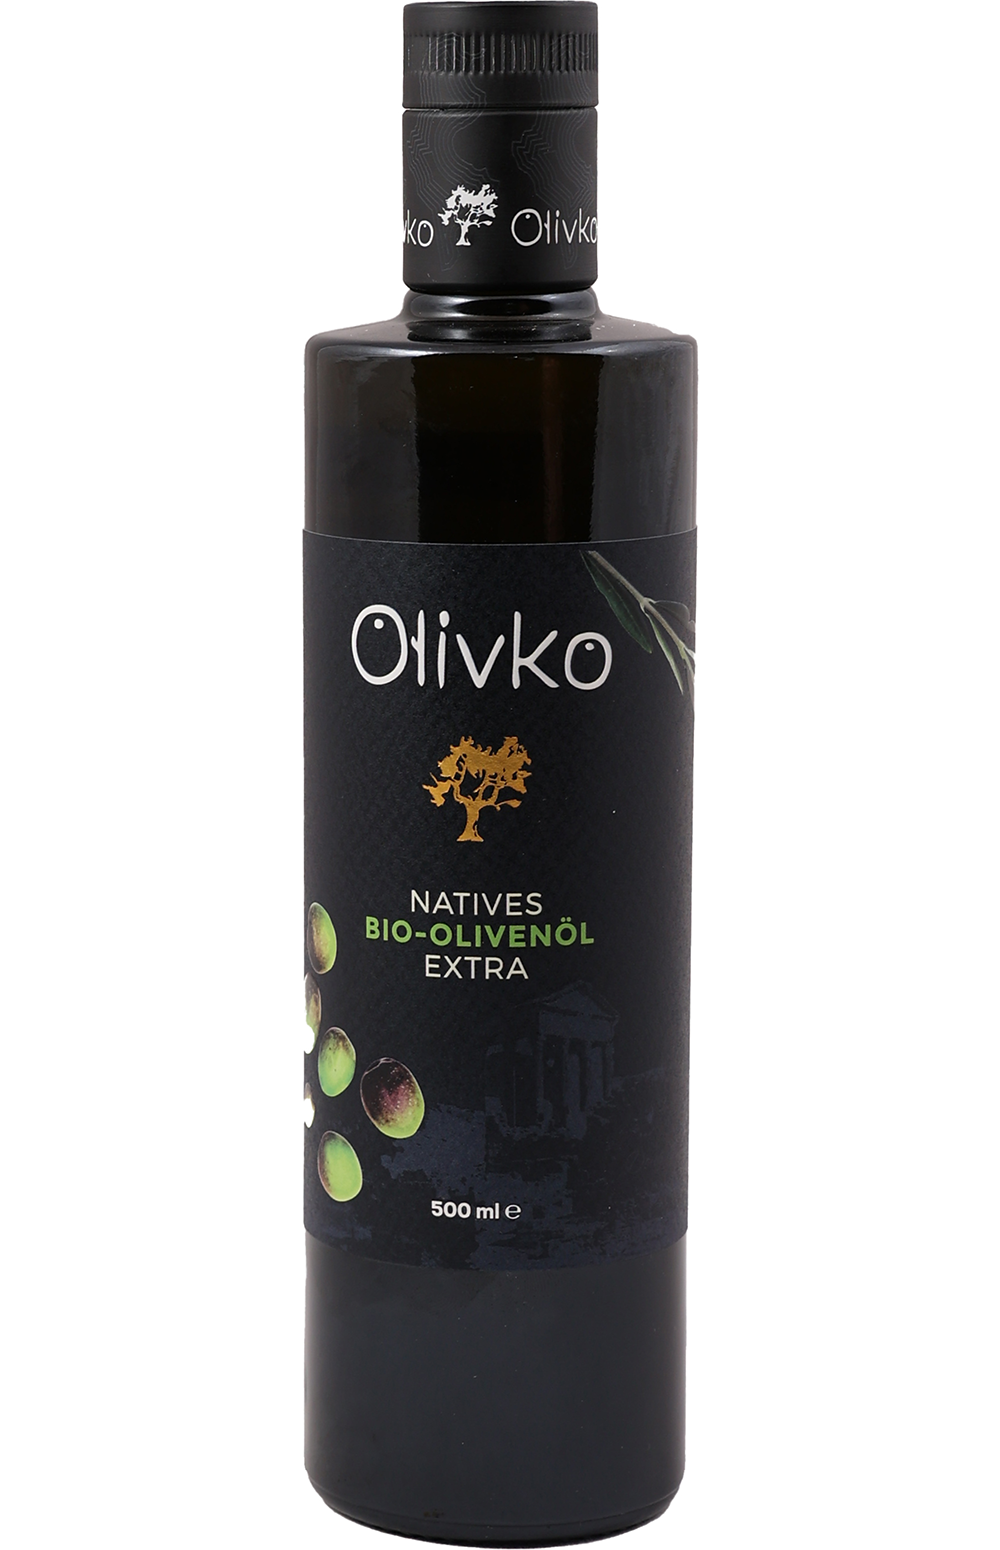 Olivko Natives Bio